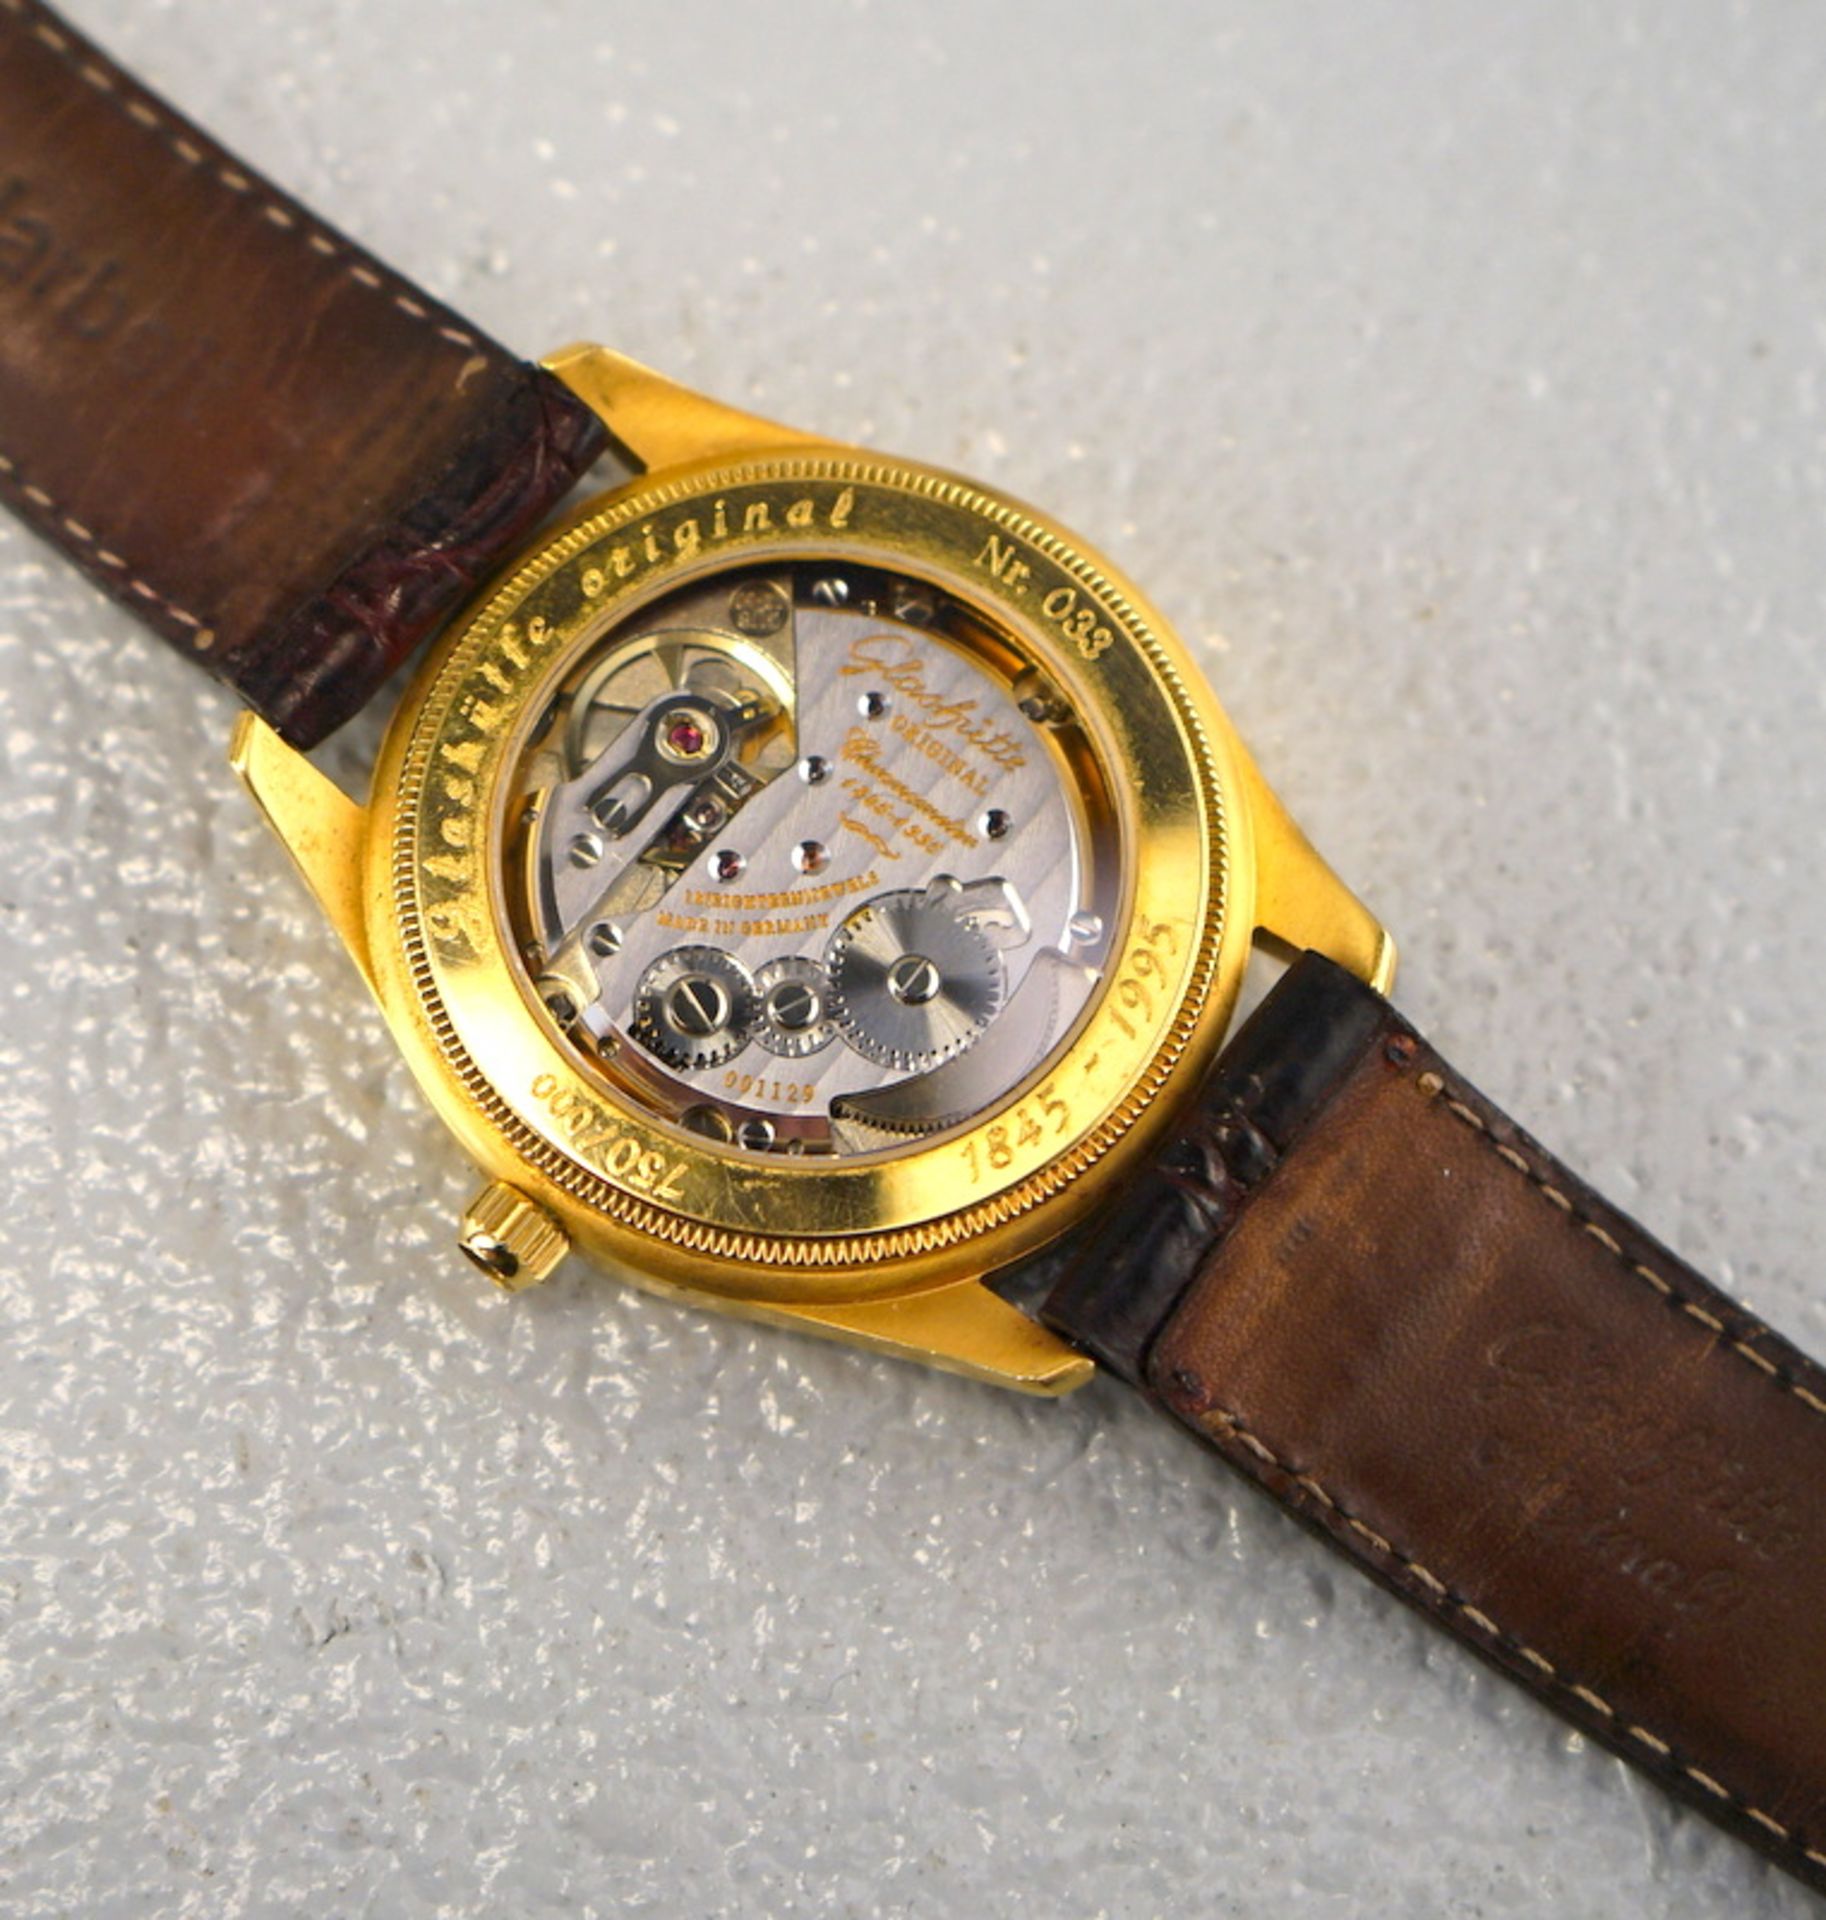 Glashütter Uhrenbetriebe: Chronometer 1845-1995 Edition Rosegold 750er - Image 3 of 4